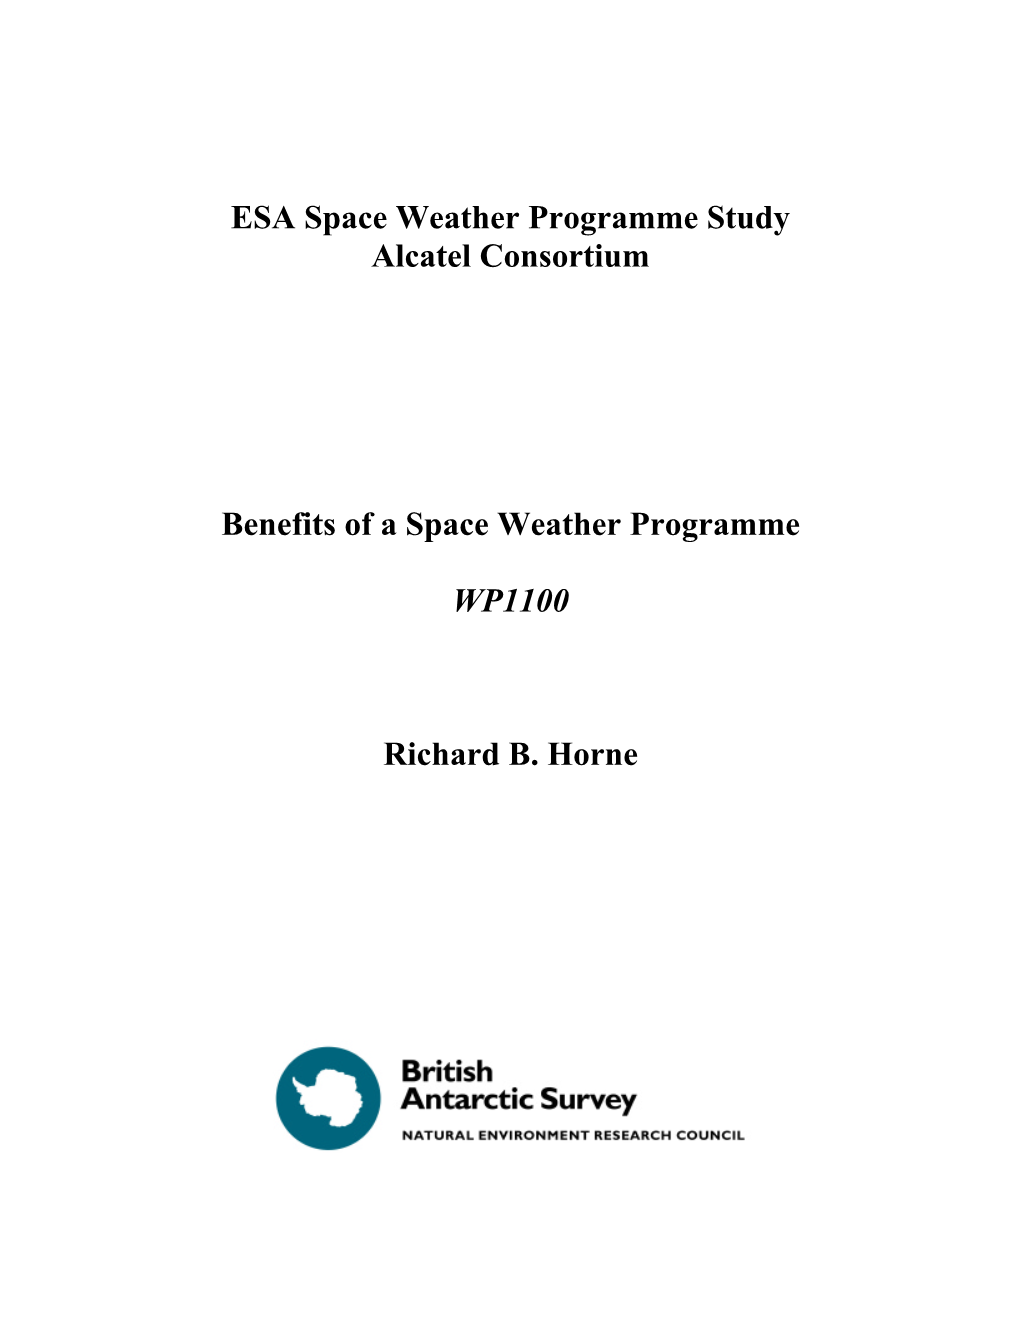 ESA Space Weather Programme Study Alcatel Consortium Benefits